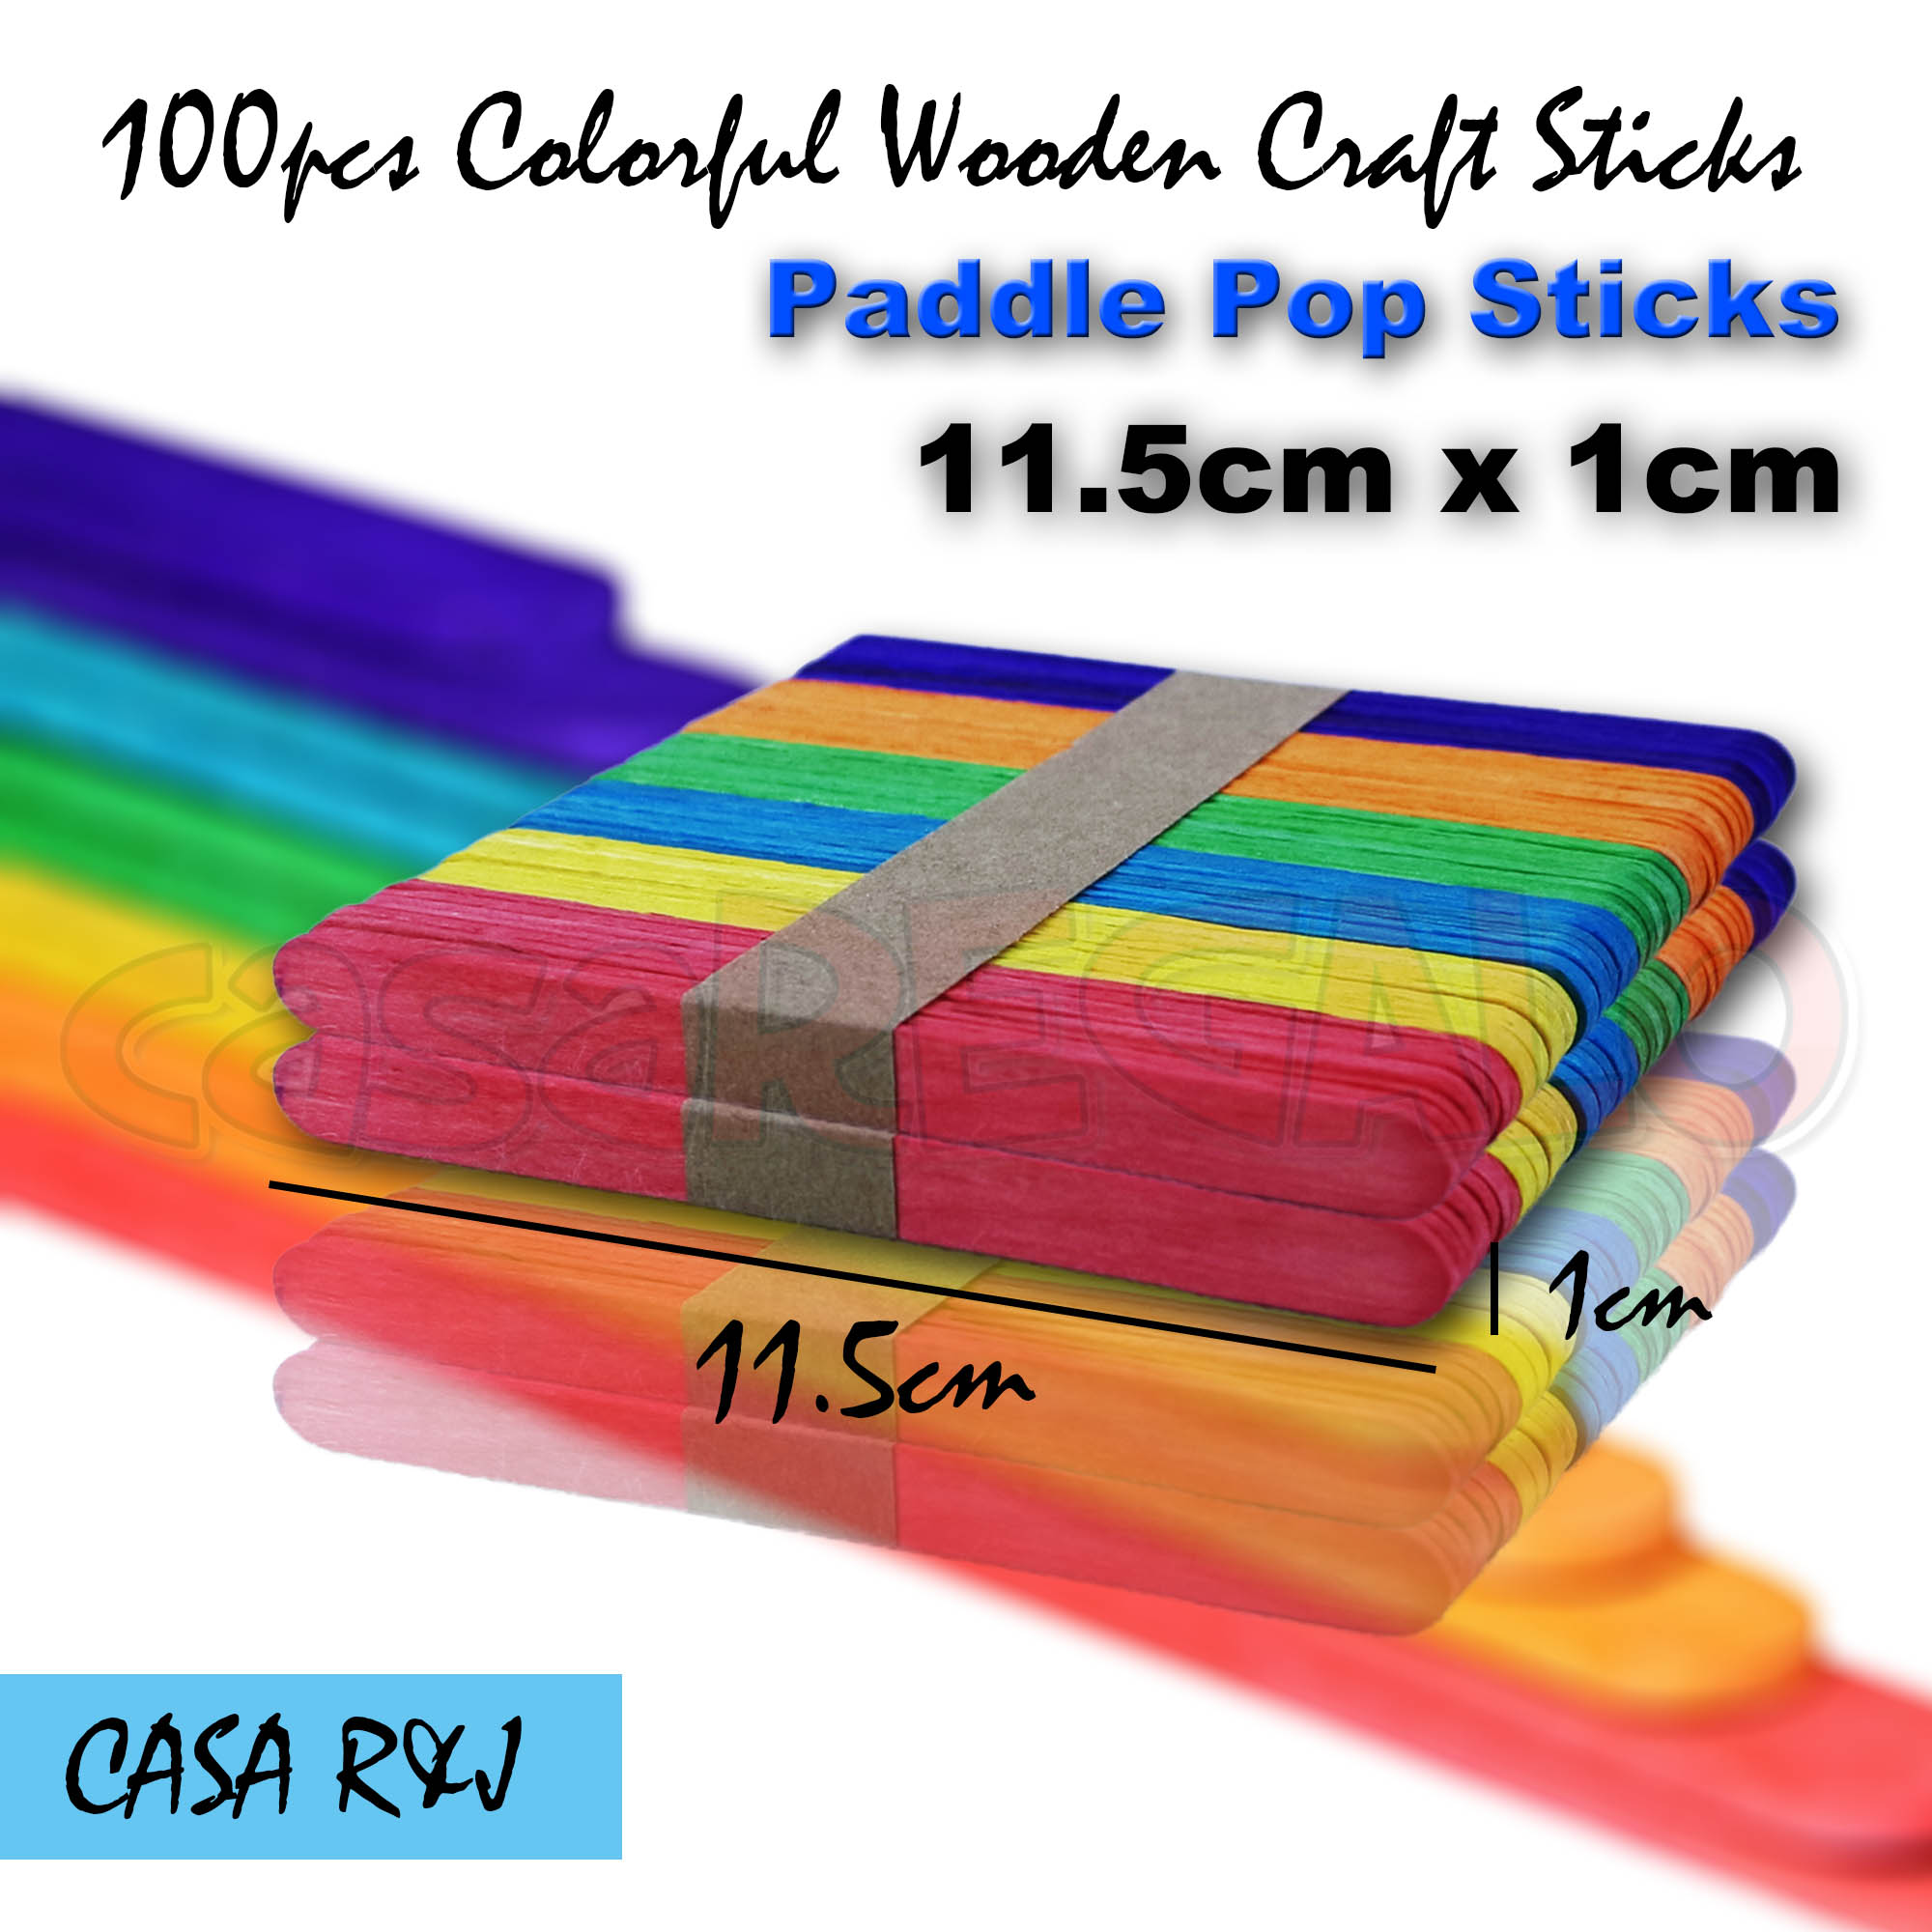 100 pc Coloured Wooden Craft Sticks Paddle Pop Sticks Ice Cream 11.5cm